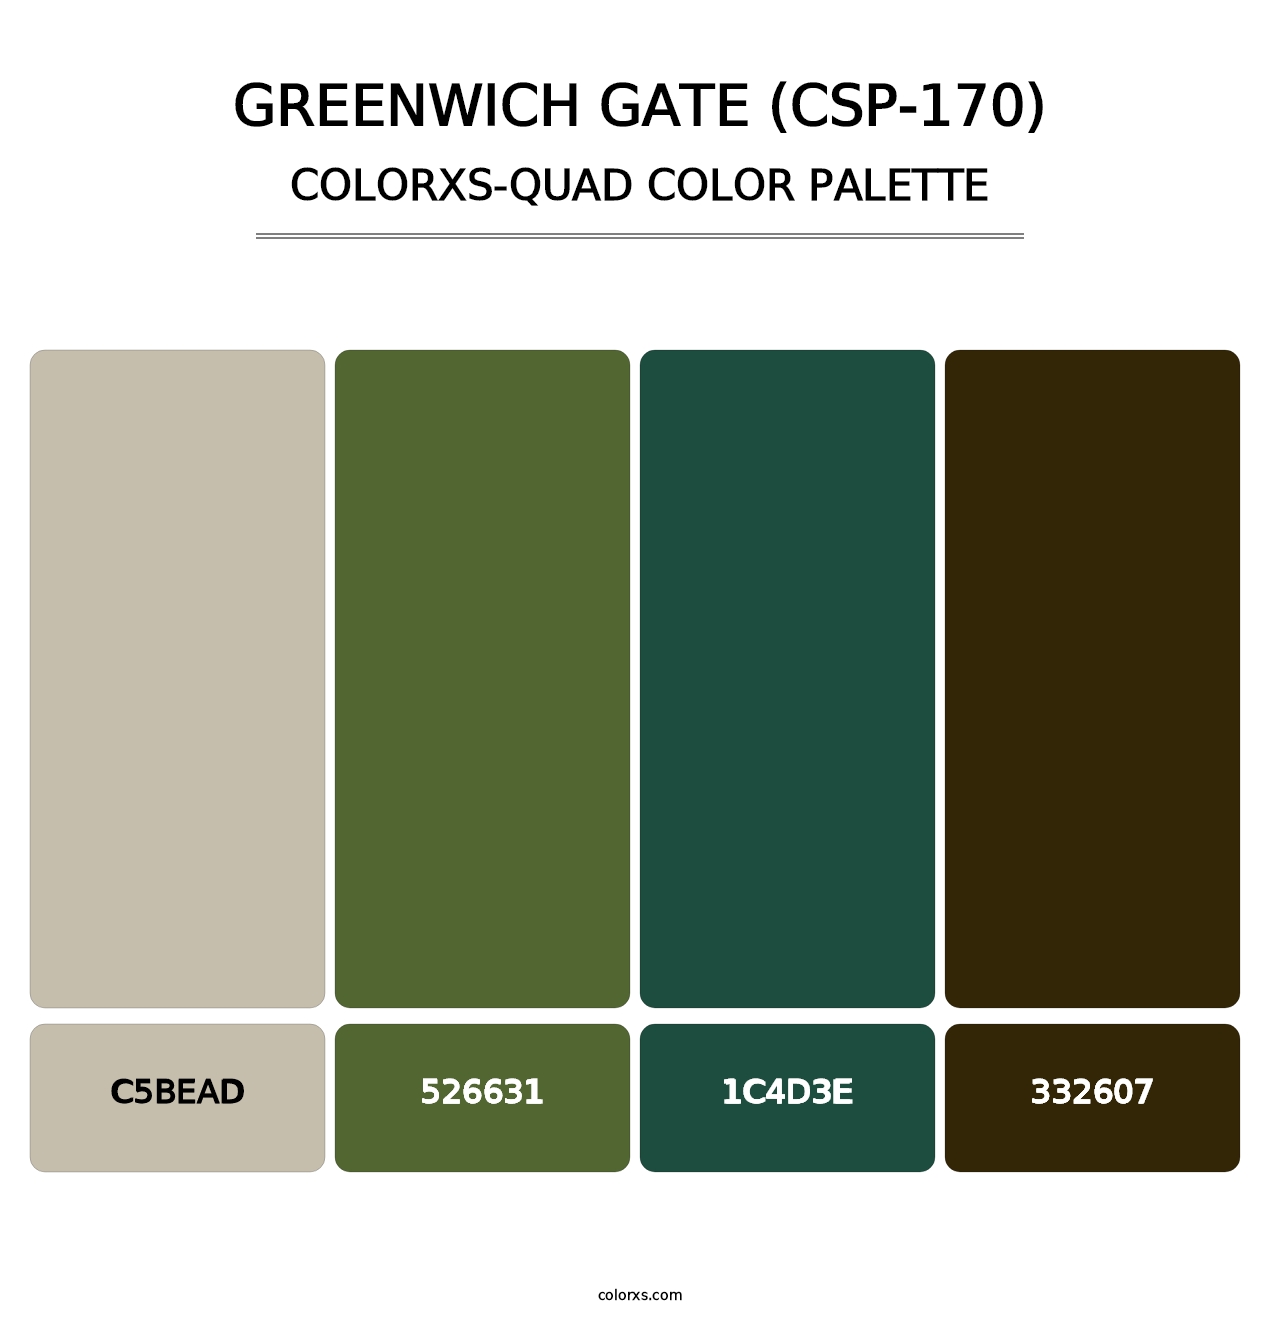 Greenwich Gate (CSP-170) - Colorxs Quad Palette